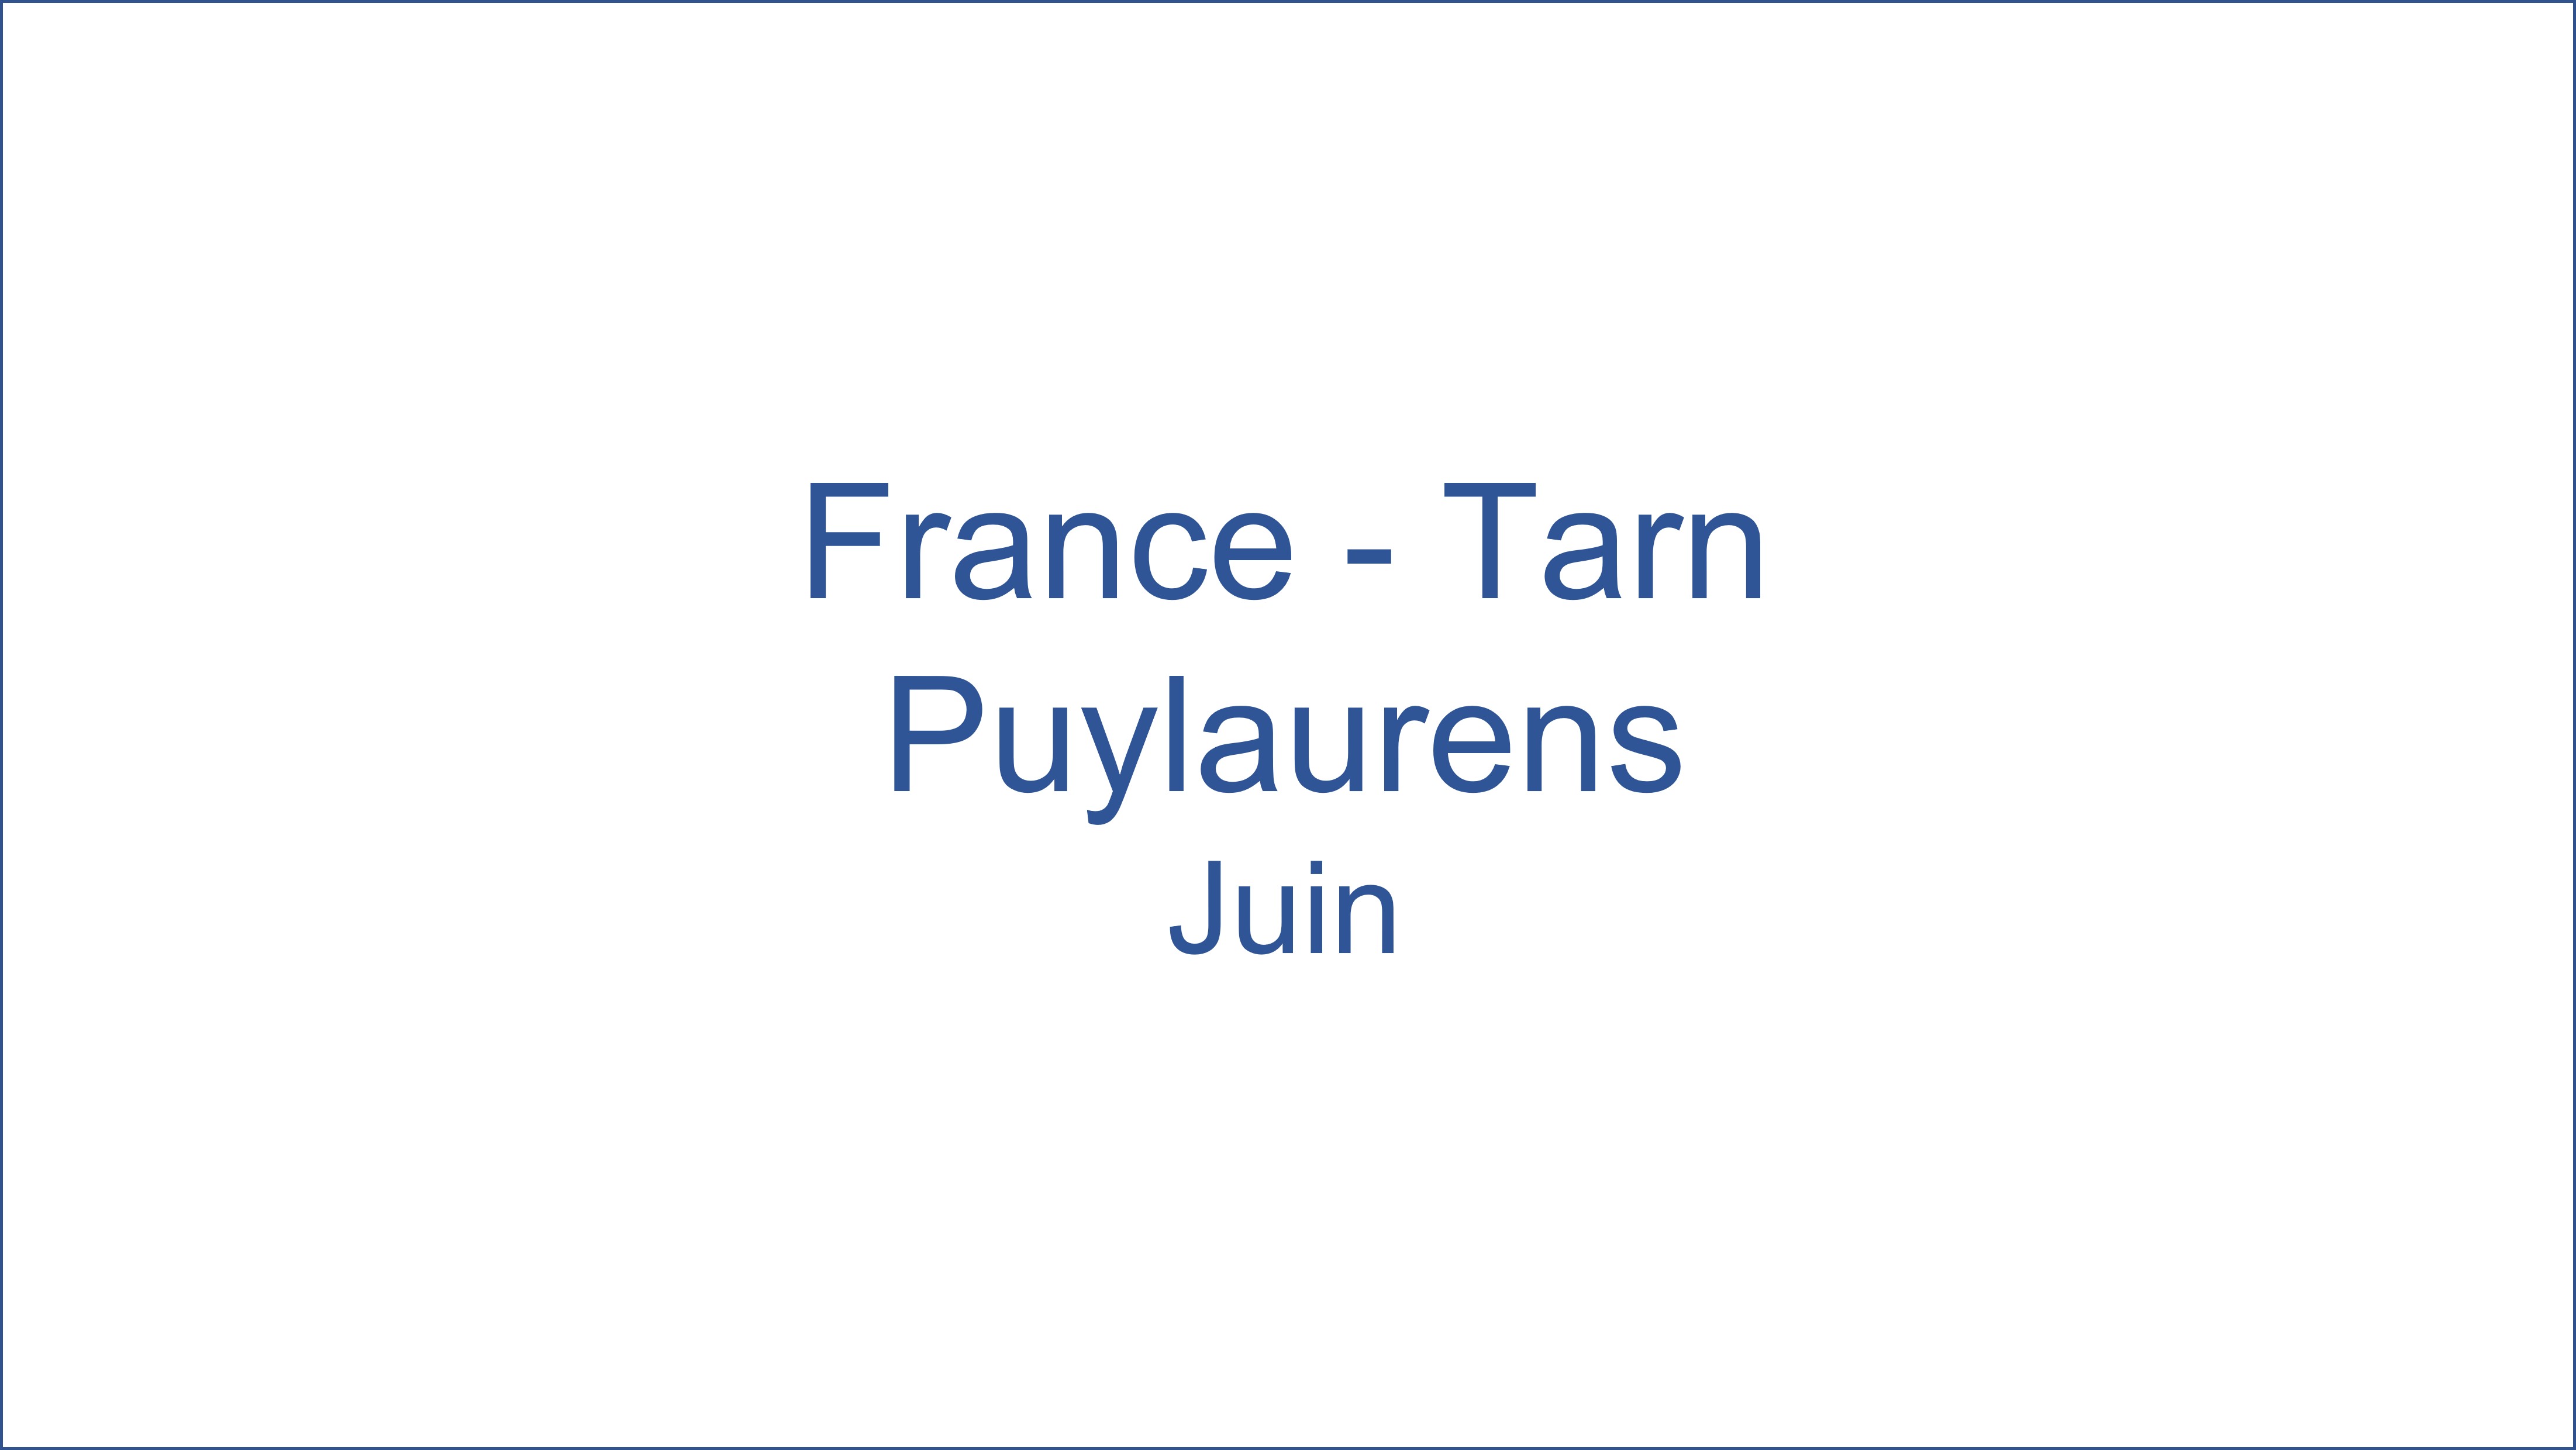 France � Tarn Puylaurens 06/2021